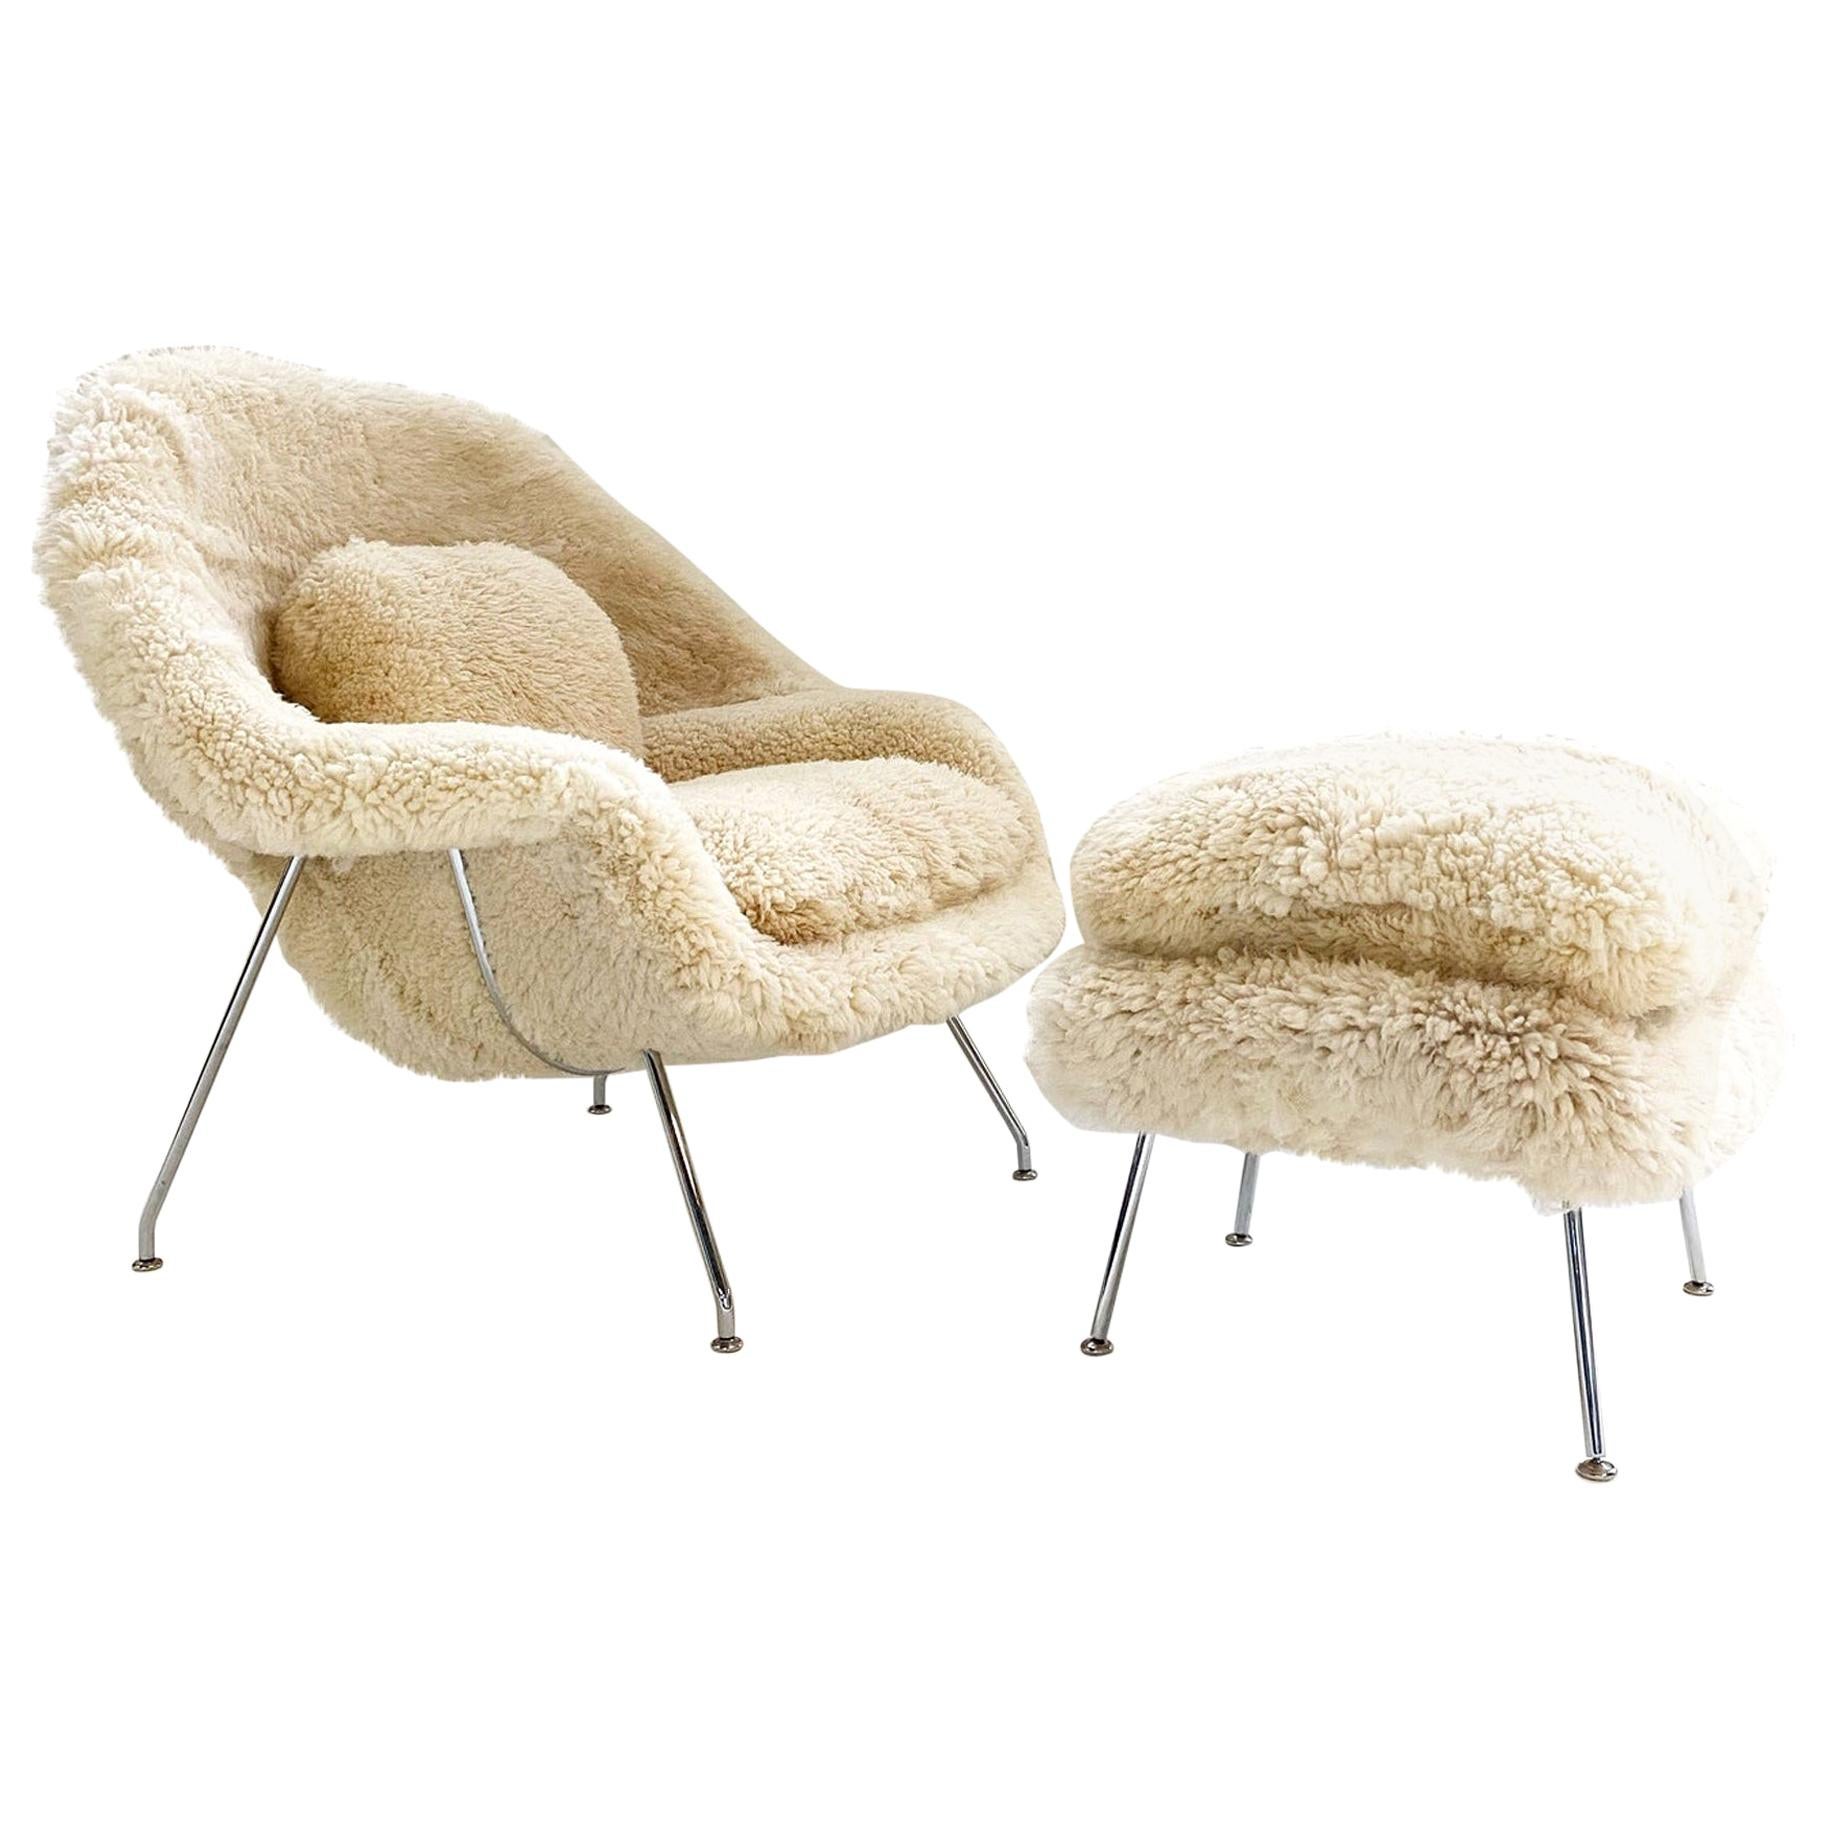 Forsyth Bespoke Eero Saarinen Womb Chair Without Ottoman in California Sheepskin